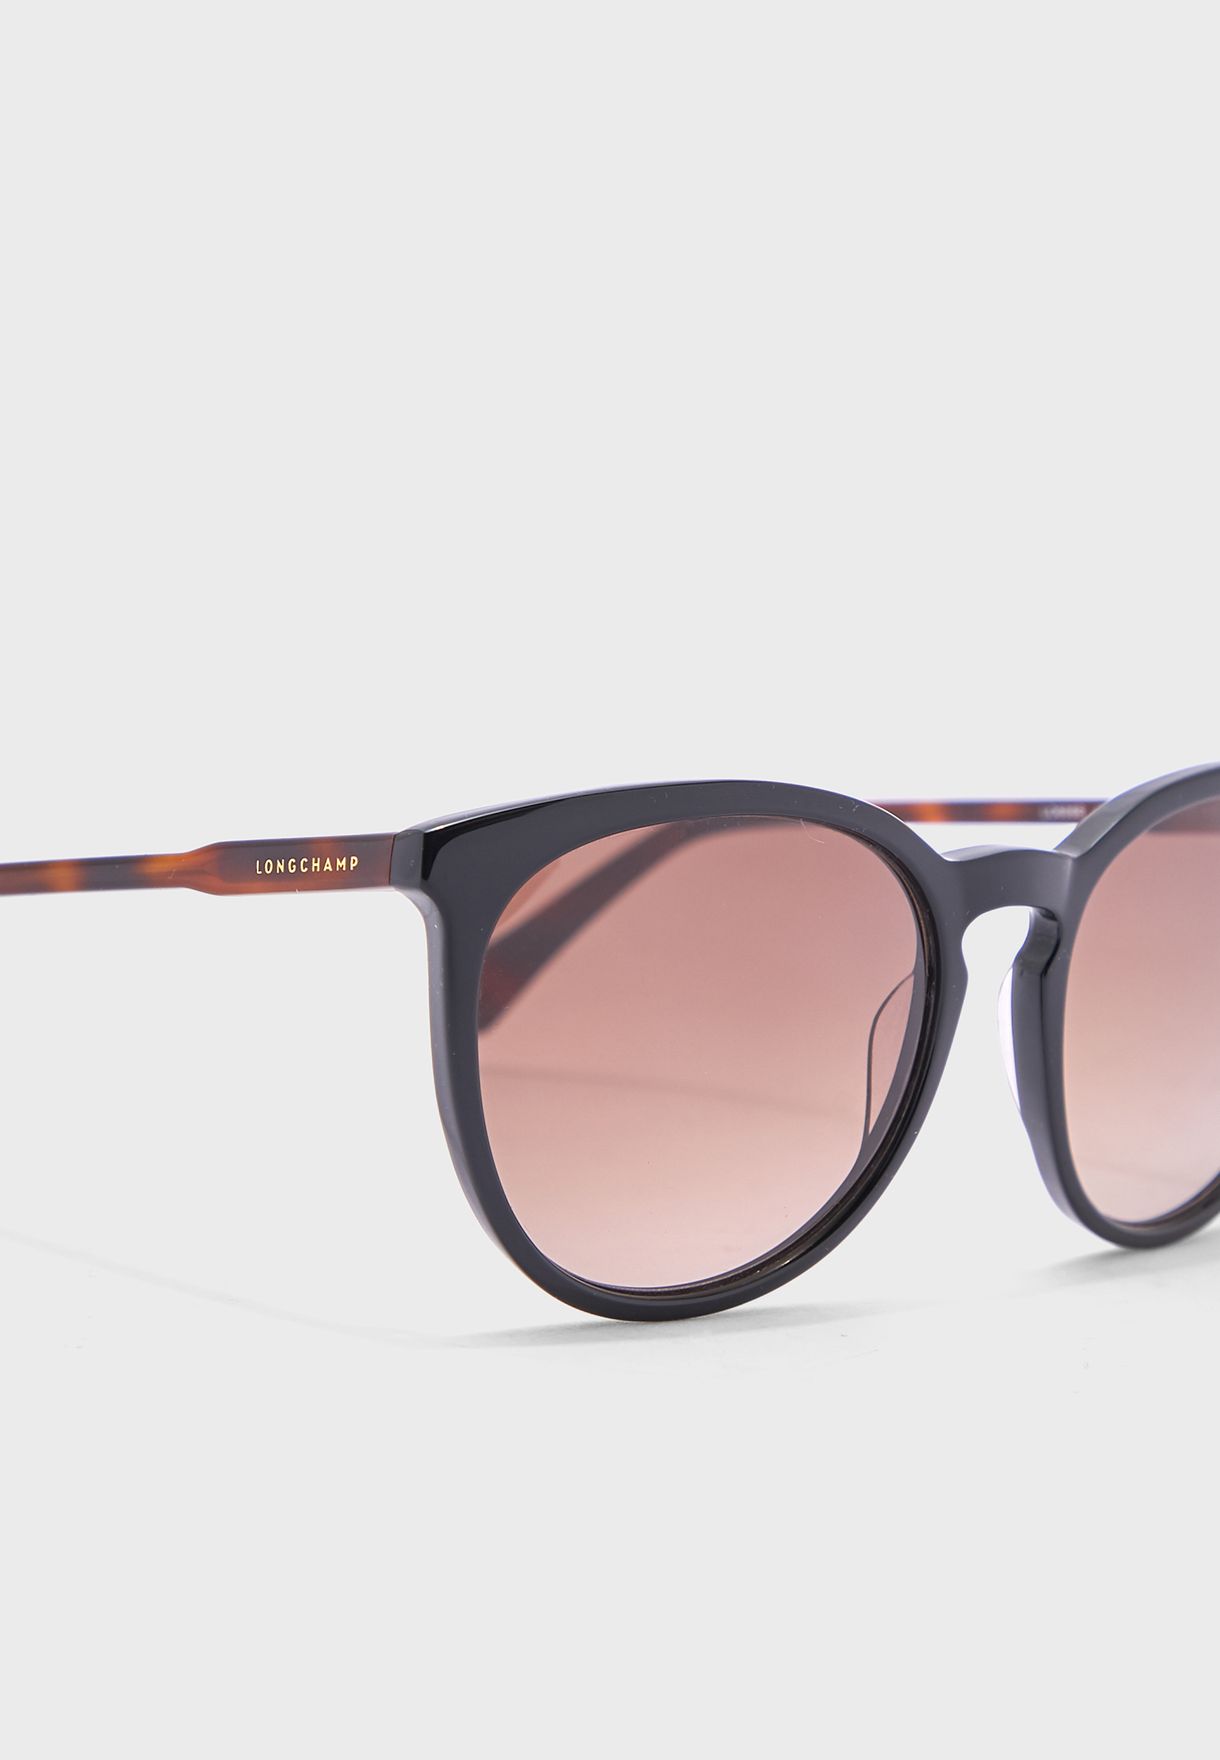 Lo606S Wayfarer Sunglasses